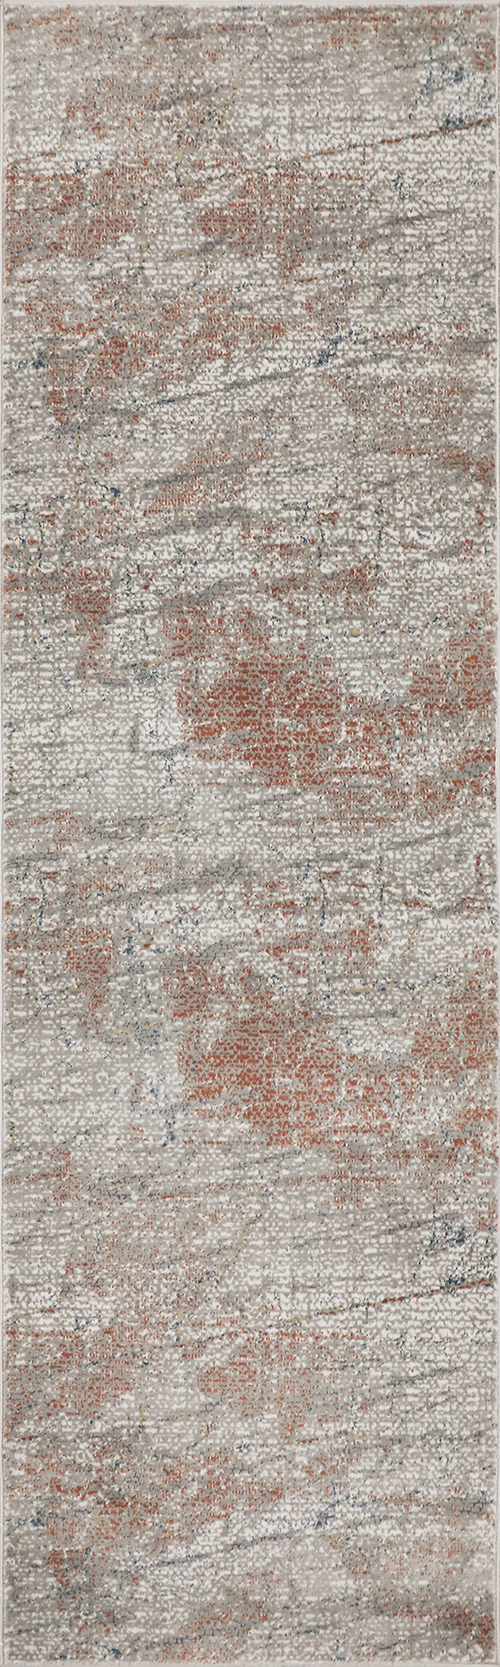 Nourison Rugs - Rustic Textures Runner RUS15 Rug in Grey / Rust - 2.3m x 0.66m